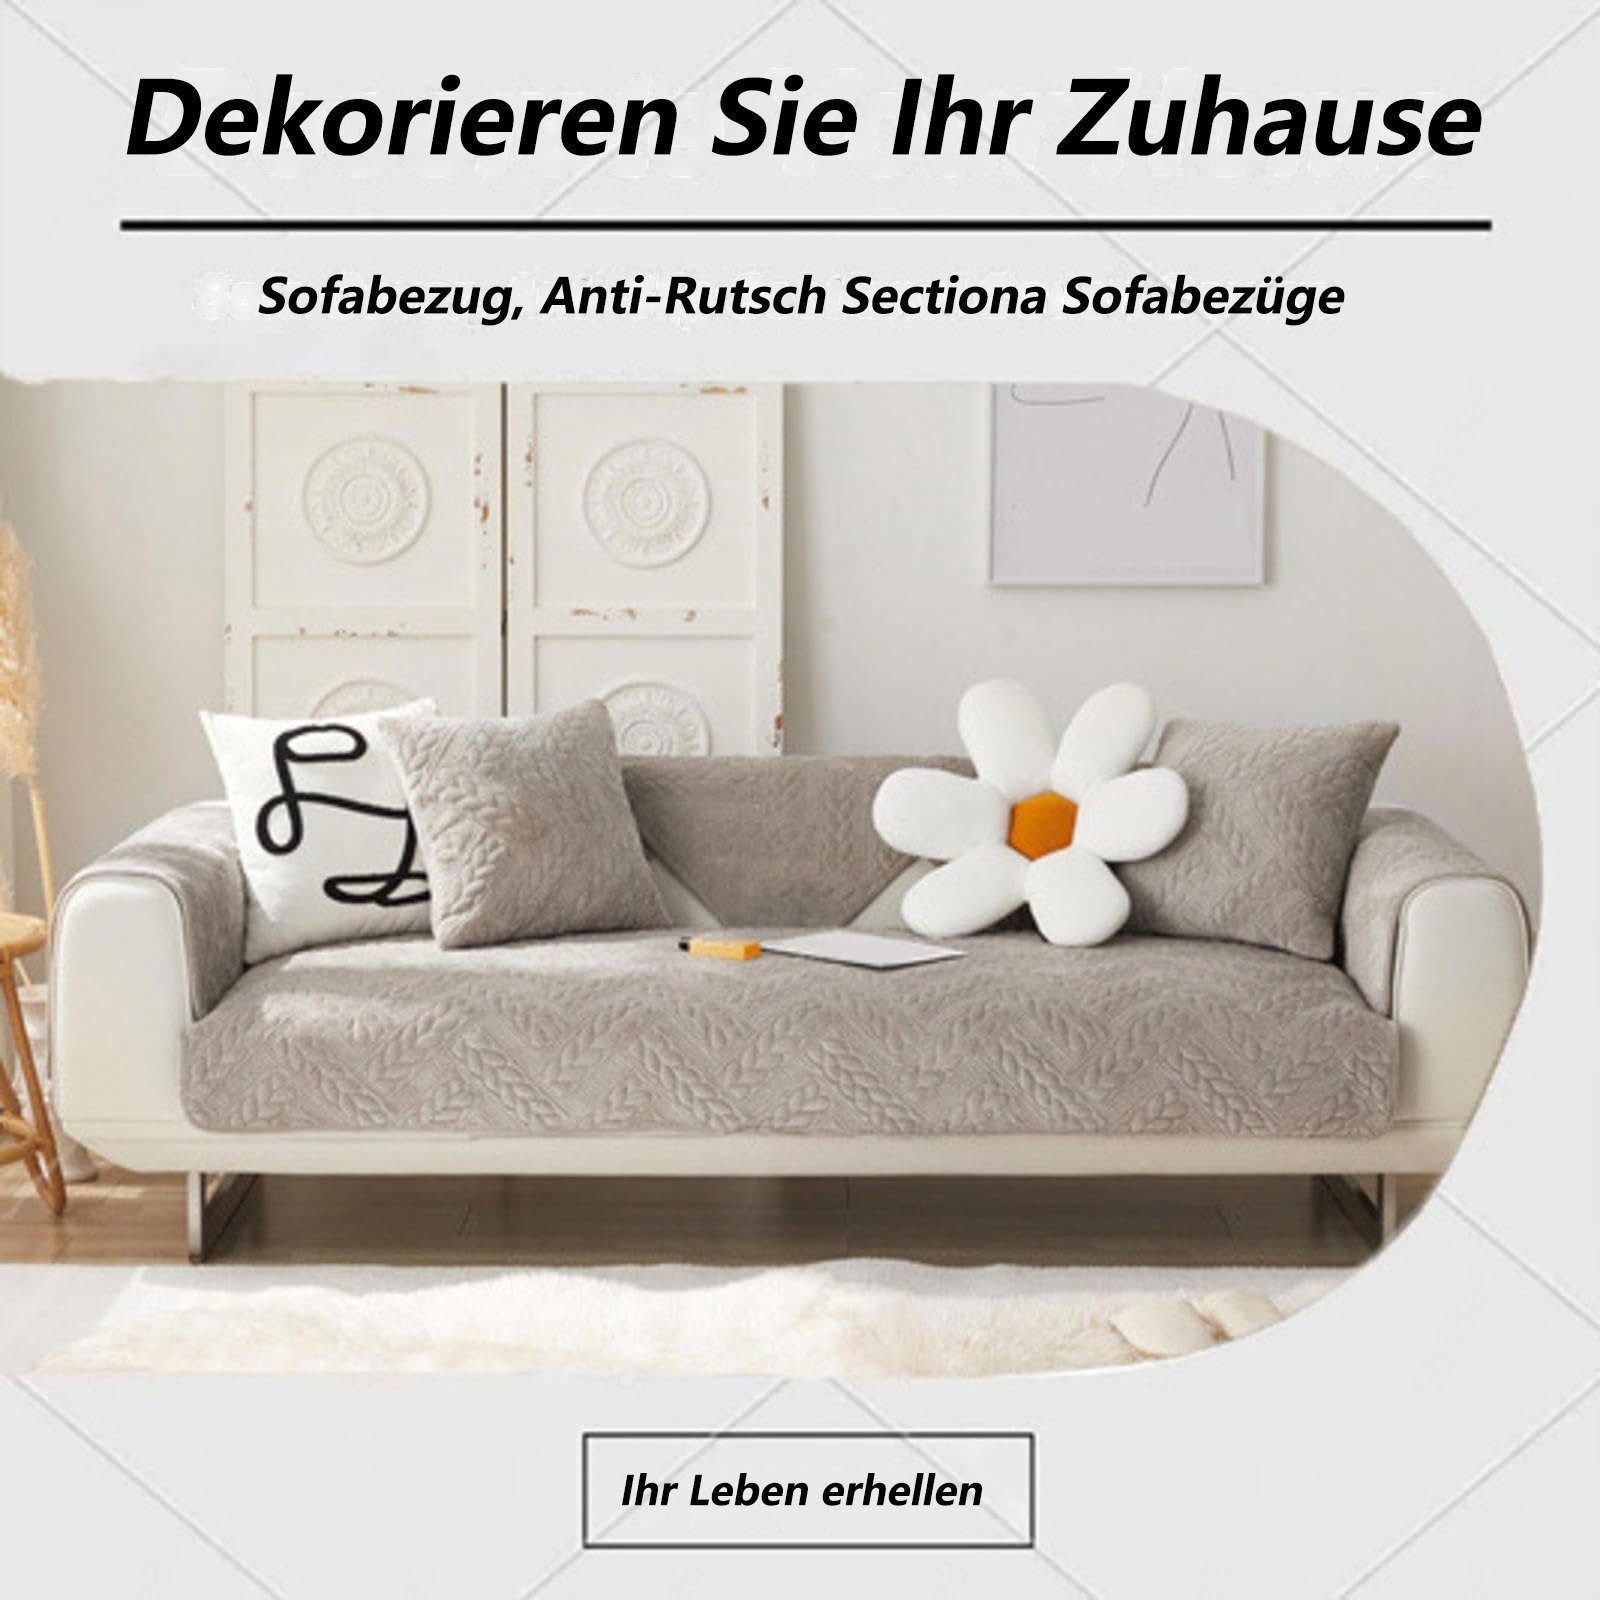 Sofabezug, warmer Weicherdecke Sofadecke, Super Sofabezug hellgrau(70*180cm) Juoungle rutschfeste Sofabezug